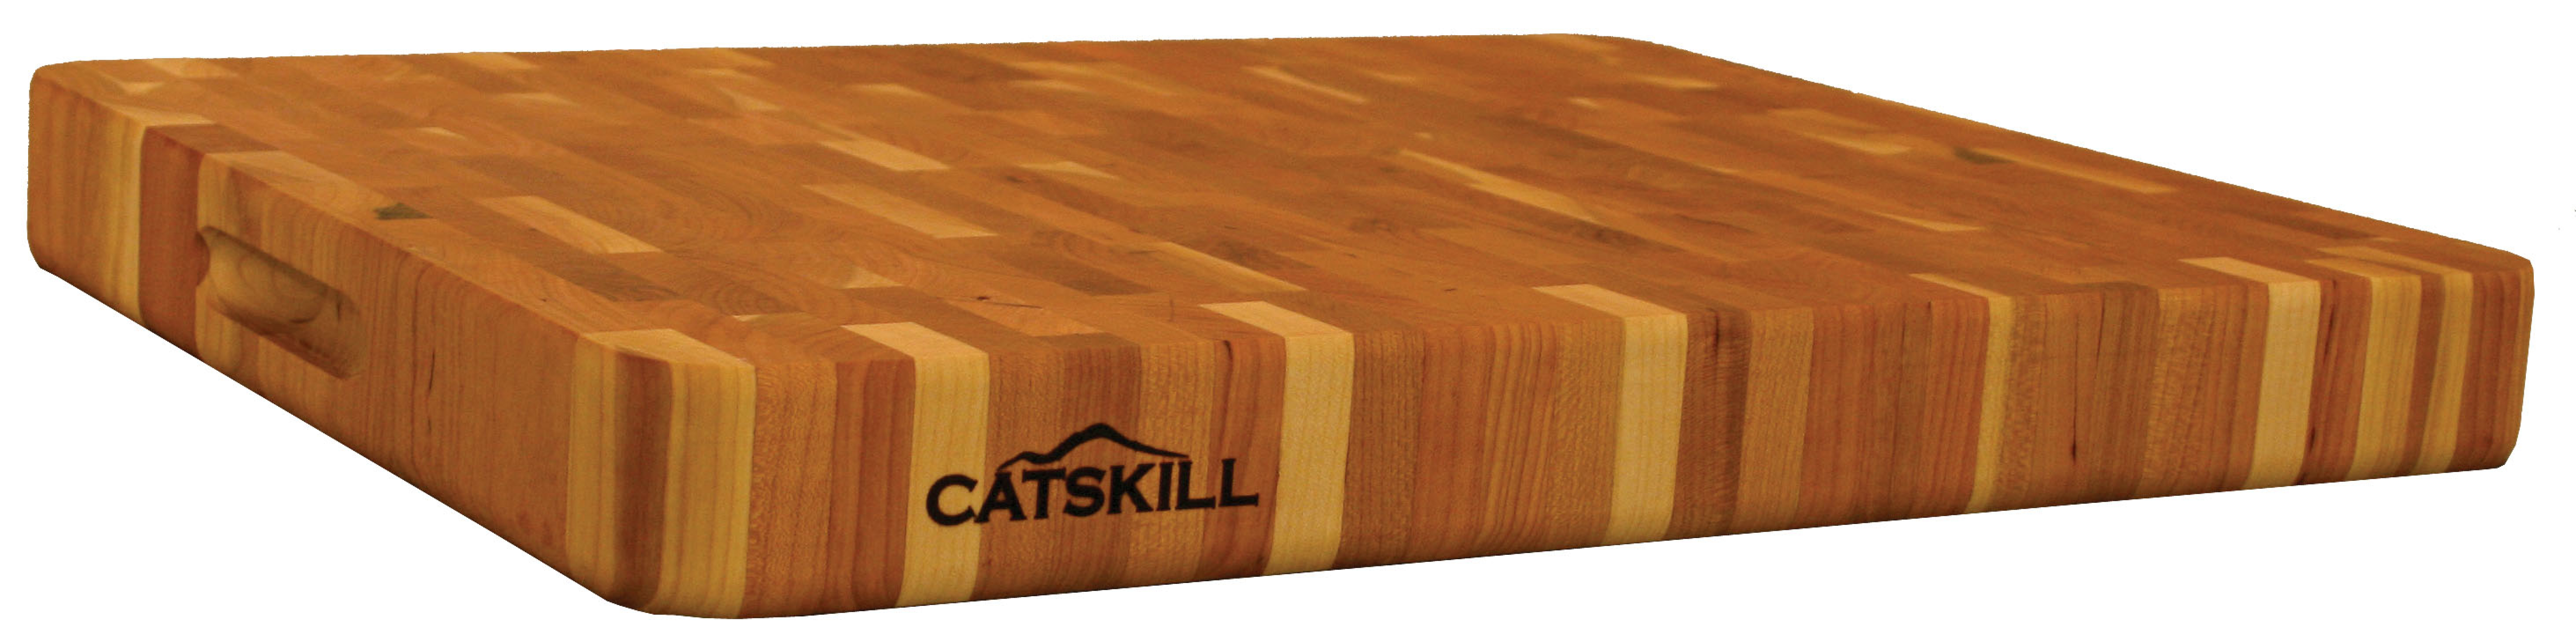 Catskill Craft Catskill Low Profile Slab Professional Grade End-Grain Cutting  Board - Macy's